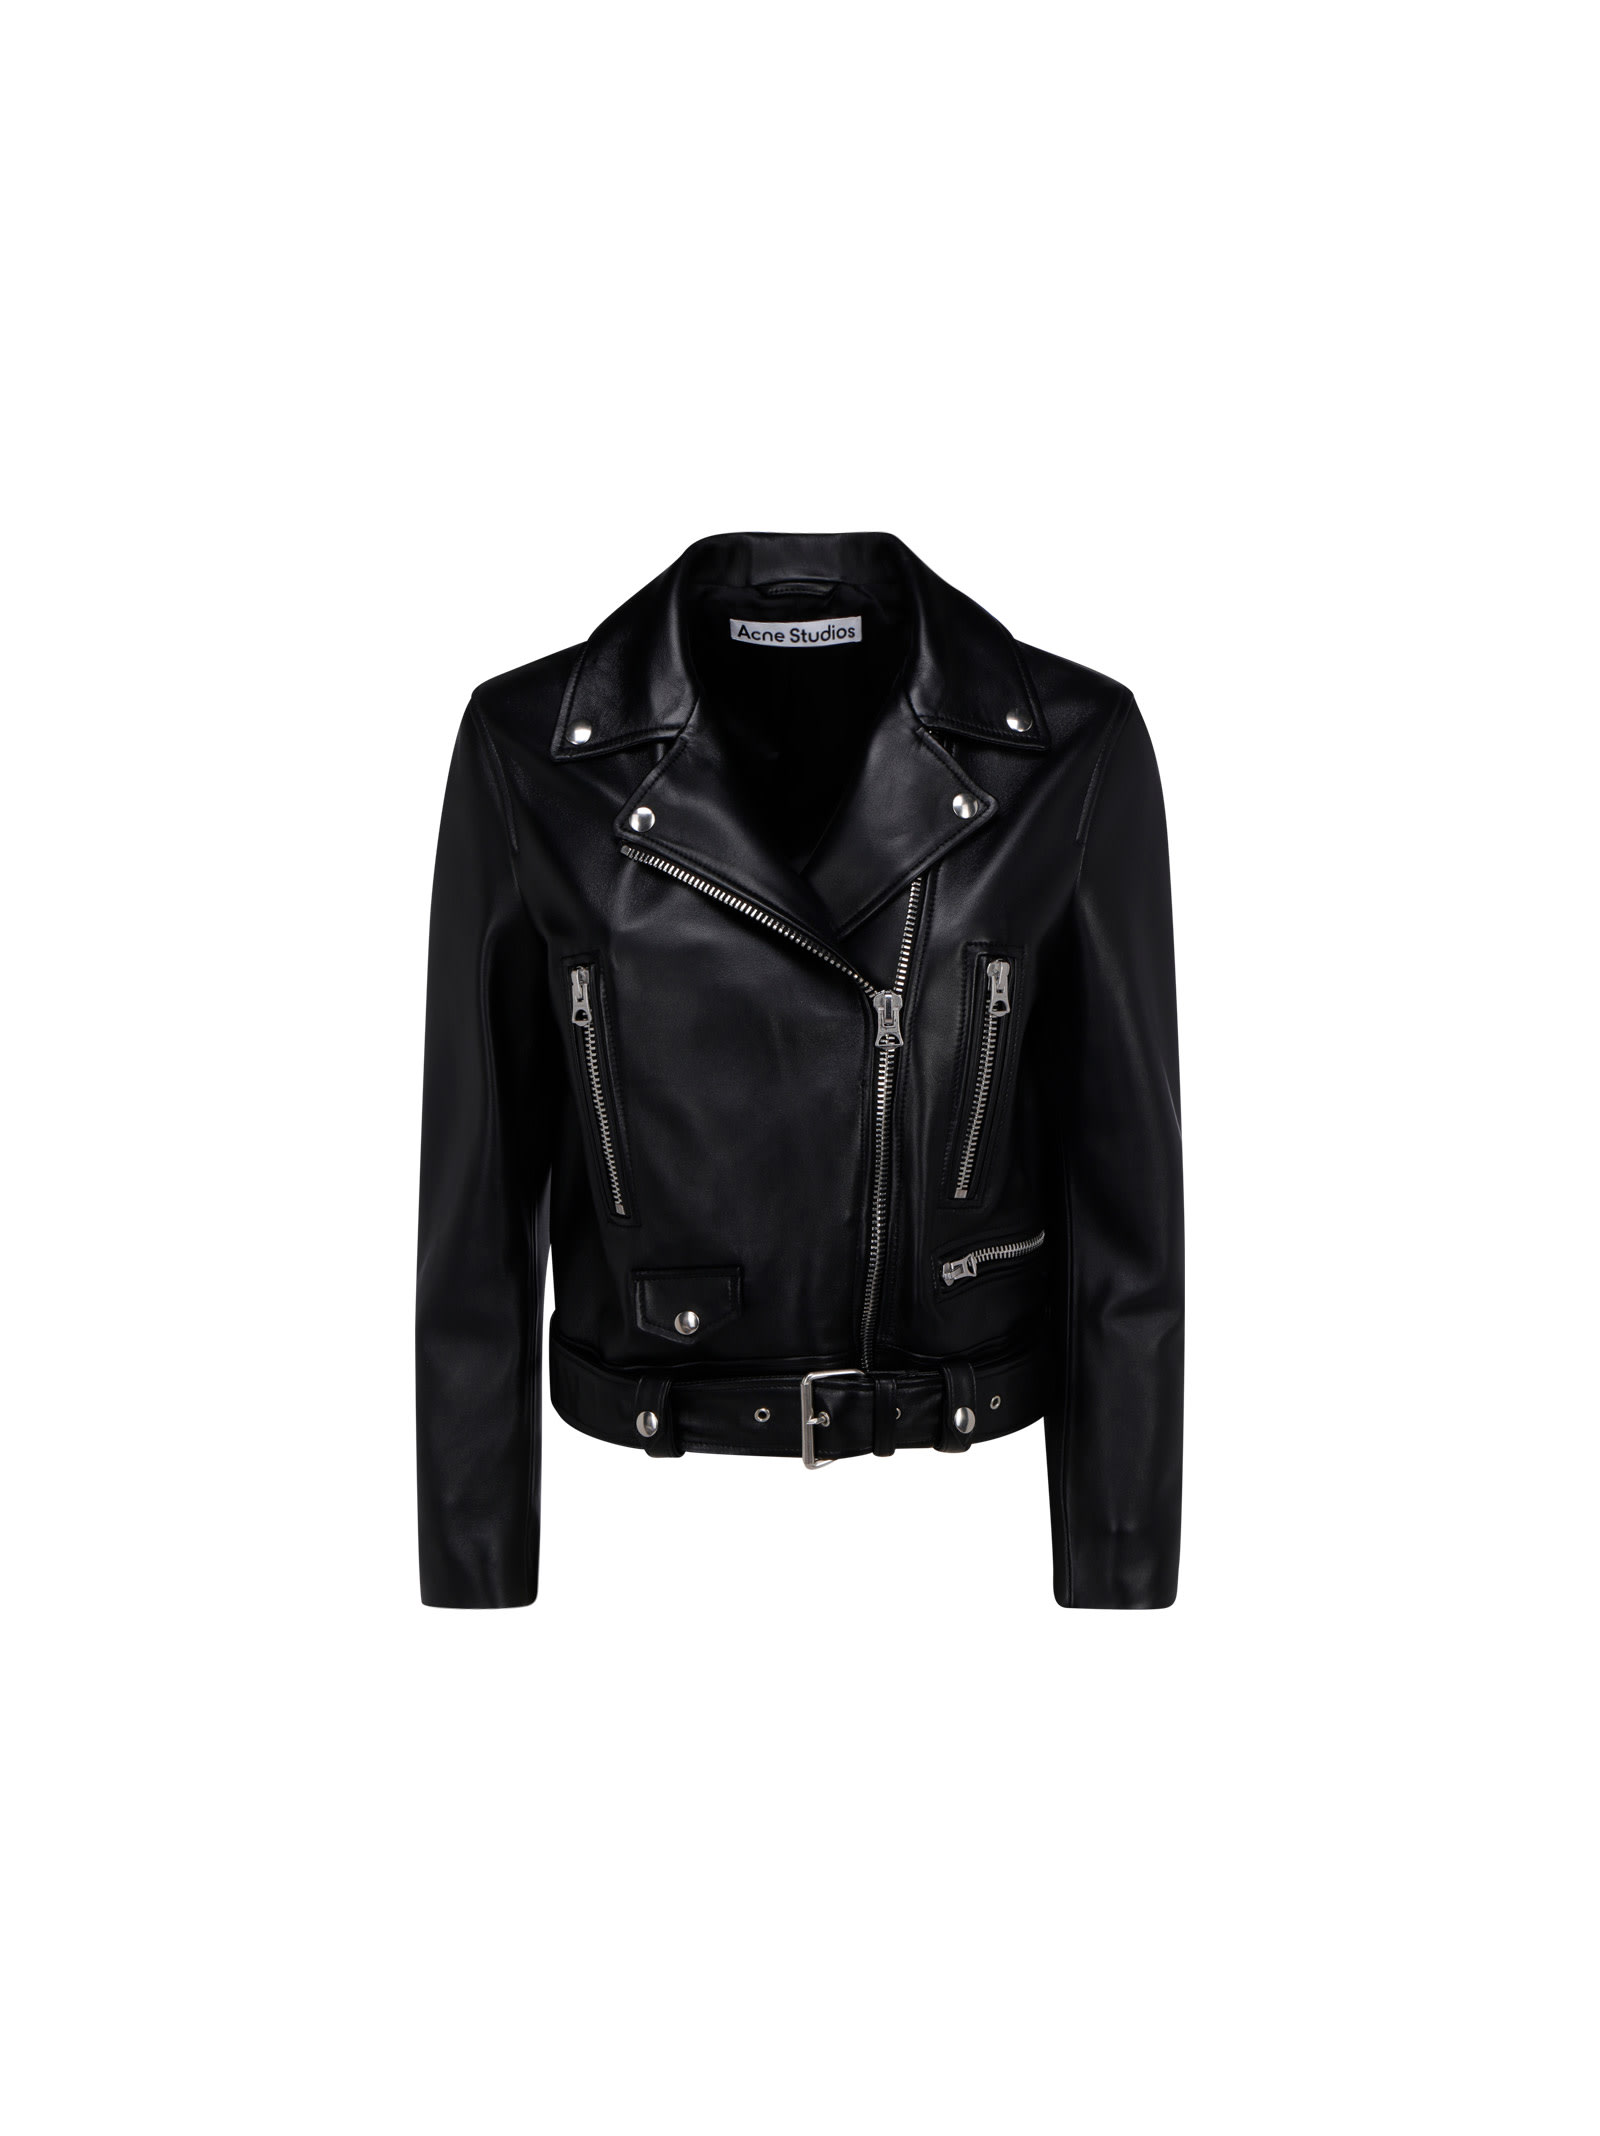 Acne Studios Black Cropped Biker Leather Jacket